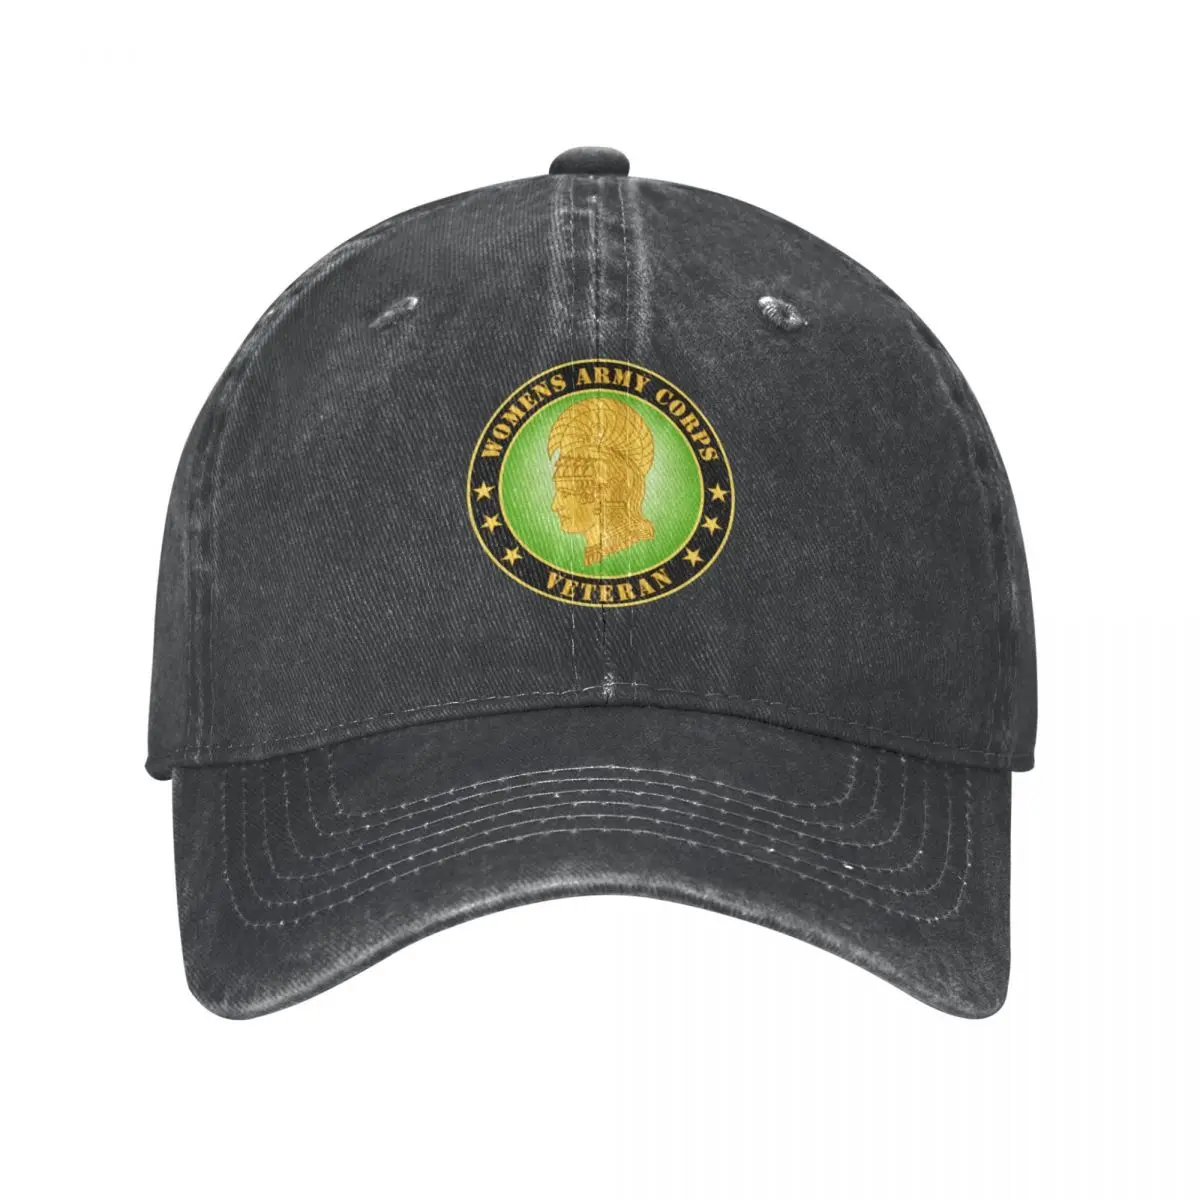 

Army - Womens Army Corps Veteran Cap Cowboy Hat Rugby sunhat uv protection solar hat custom cap hat women Men's